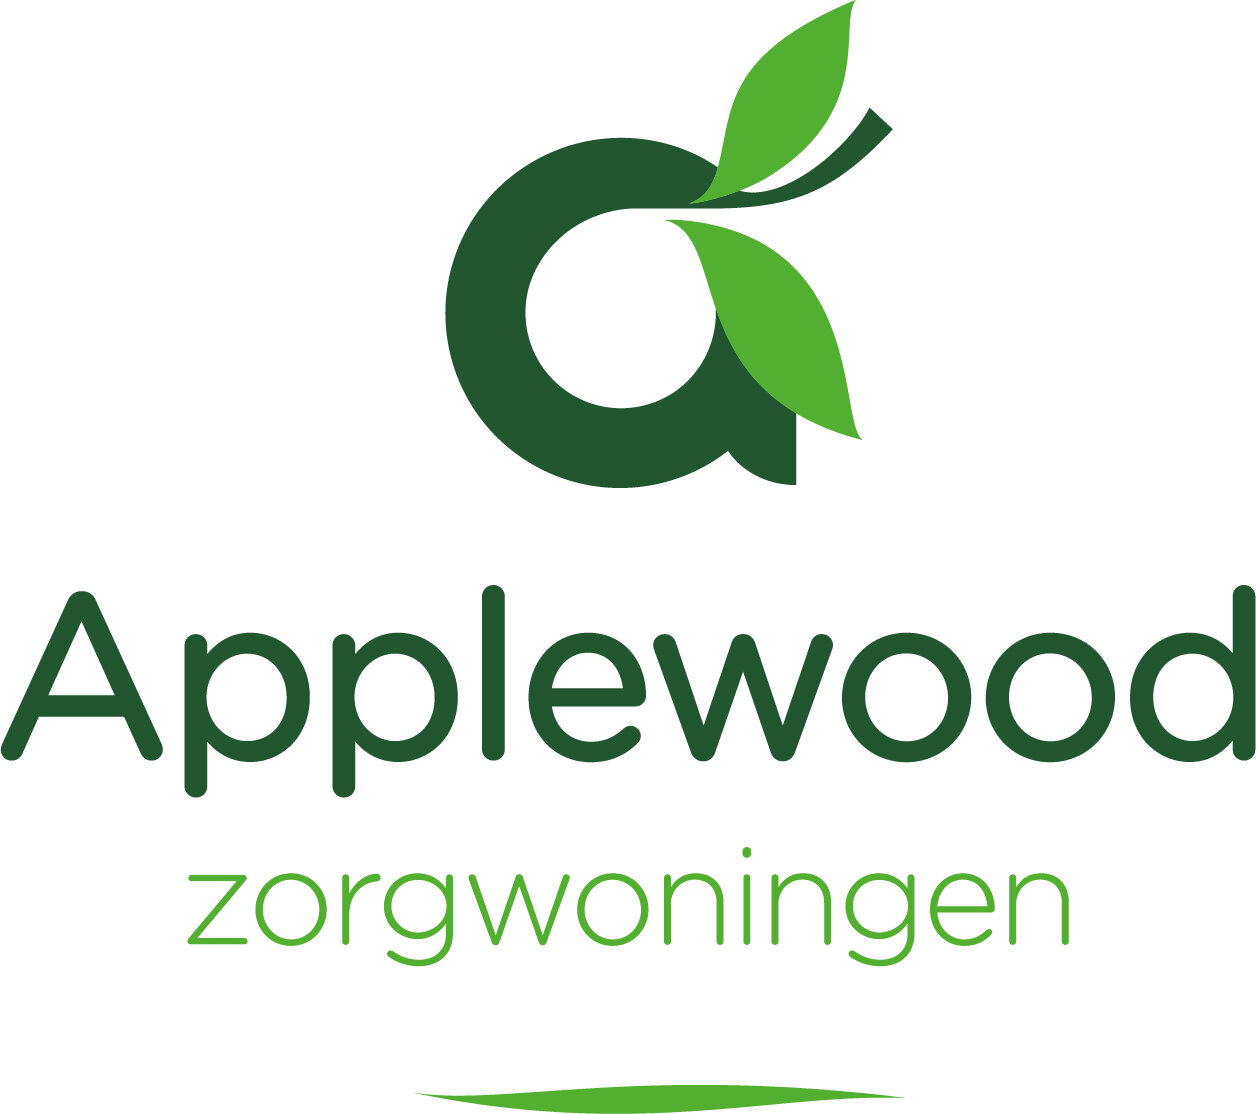 Applewood_logo.jpg